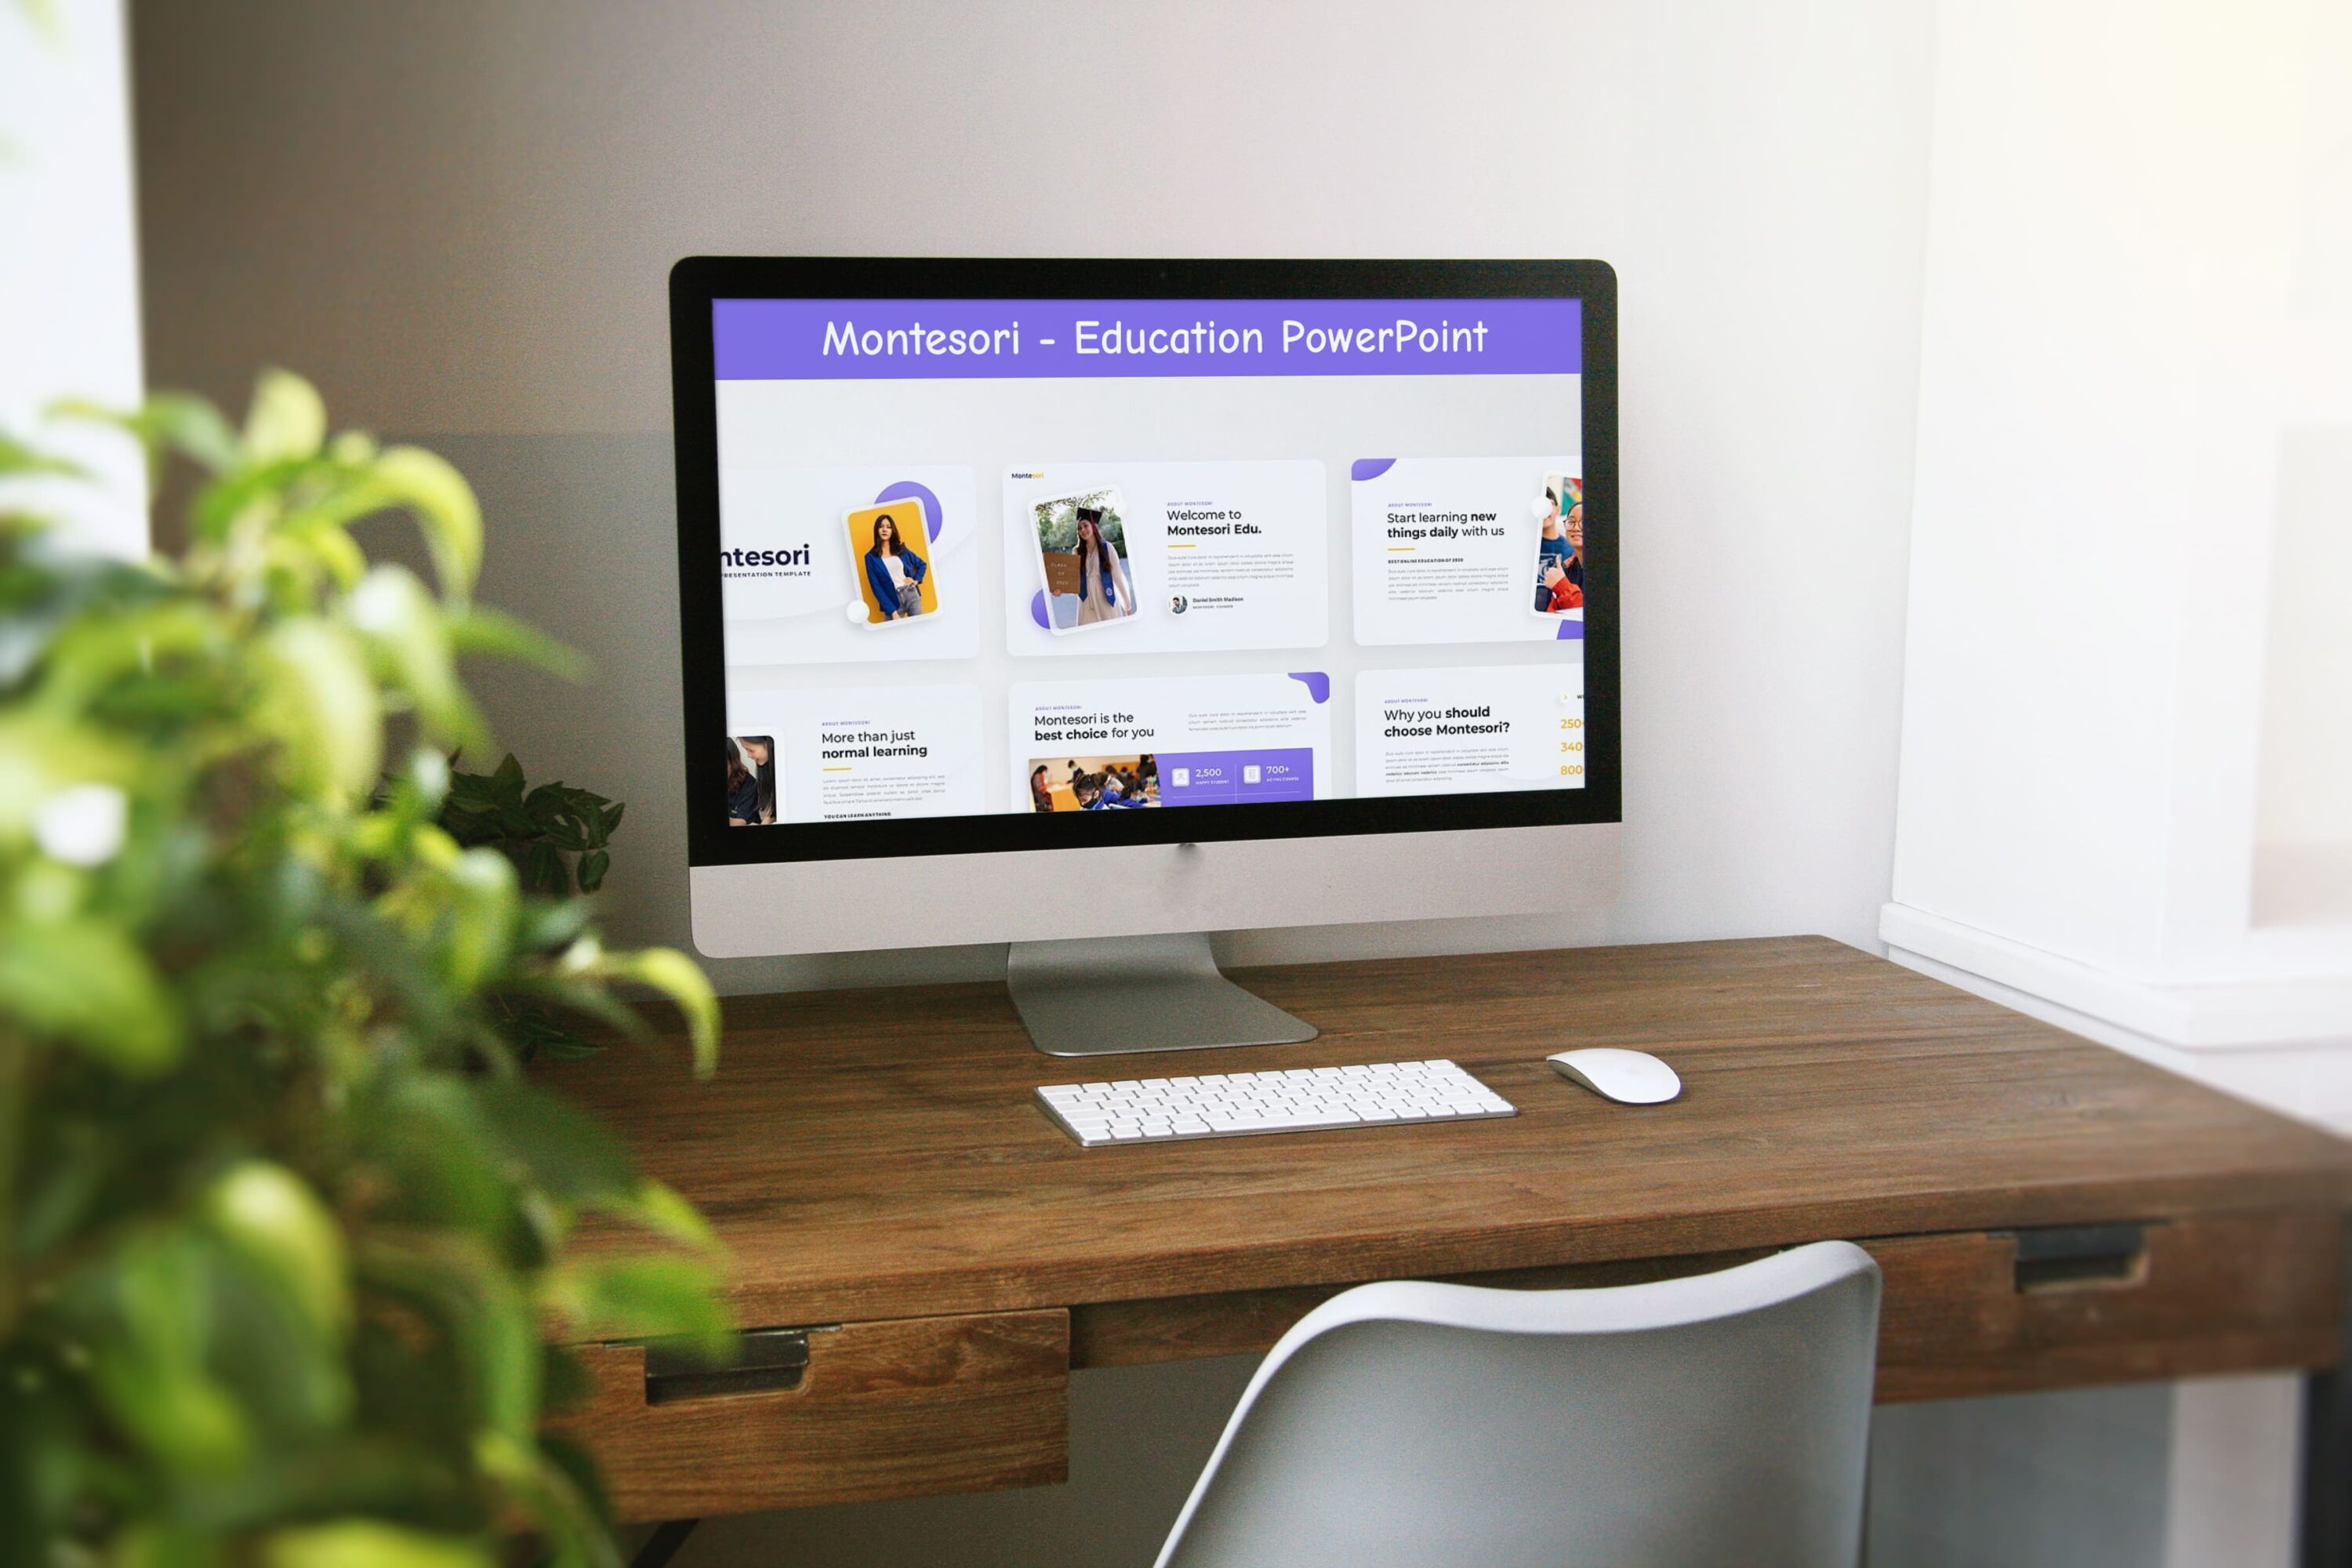 Montesori - Education PowerPoint - desktop.